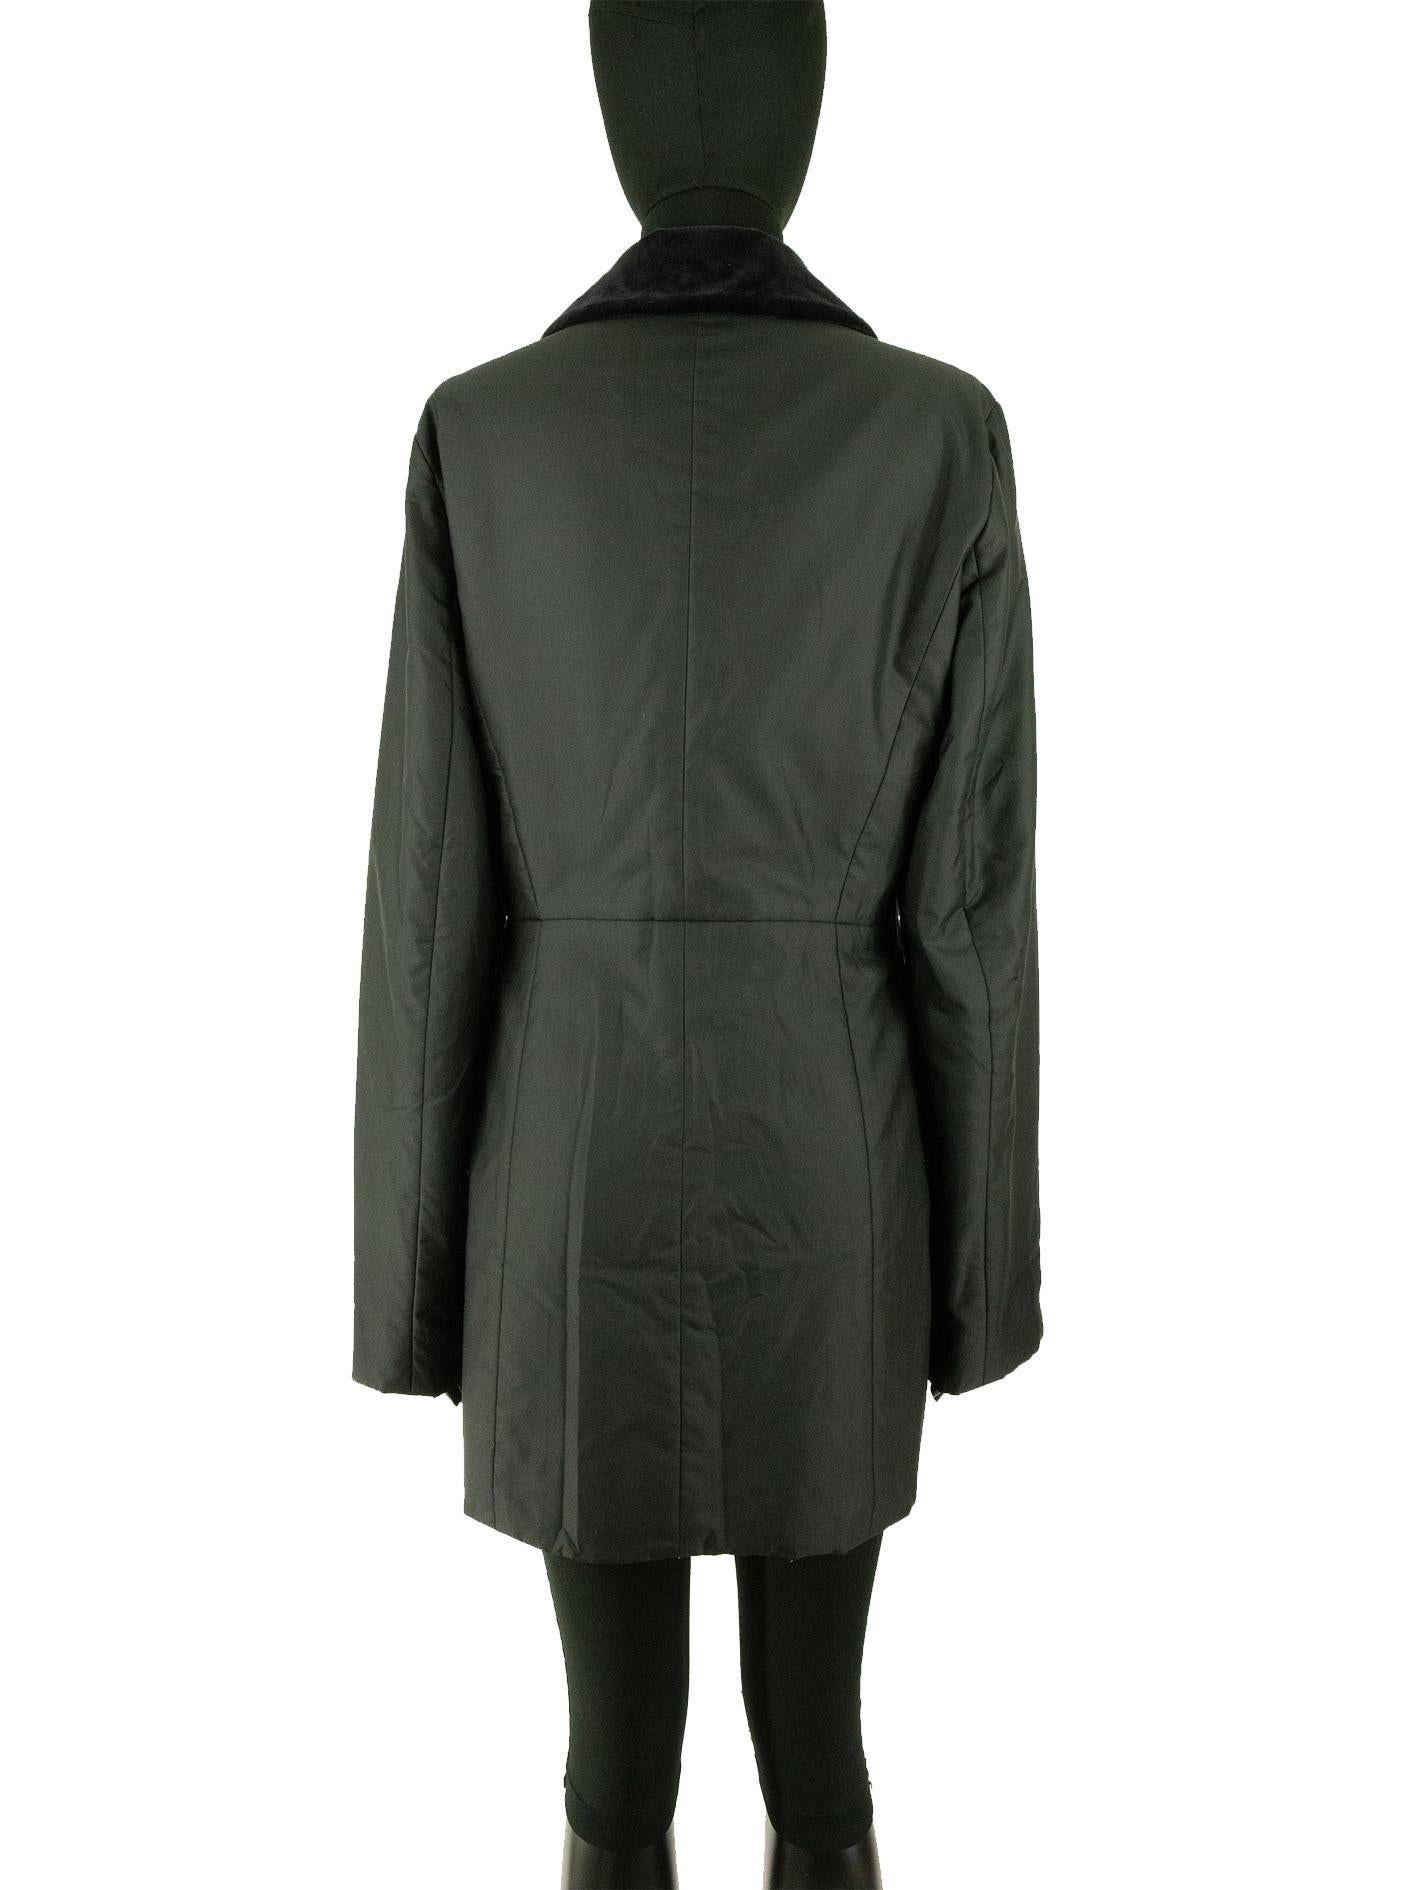 Hermès Black Jacket With Printed Lining For Sale 1